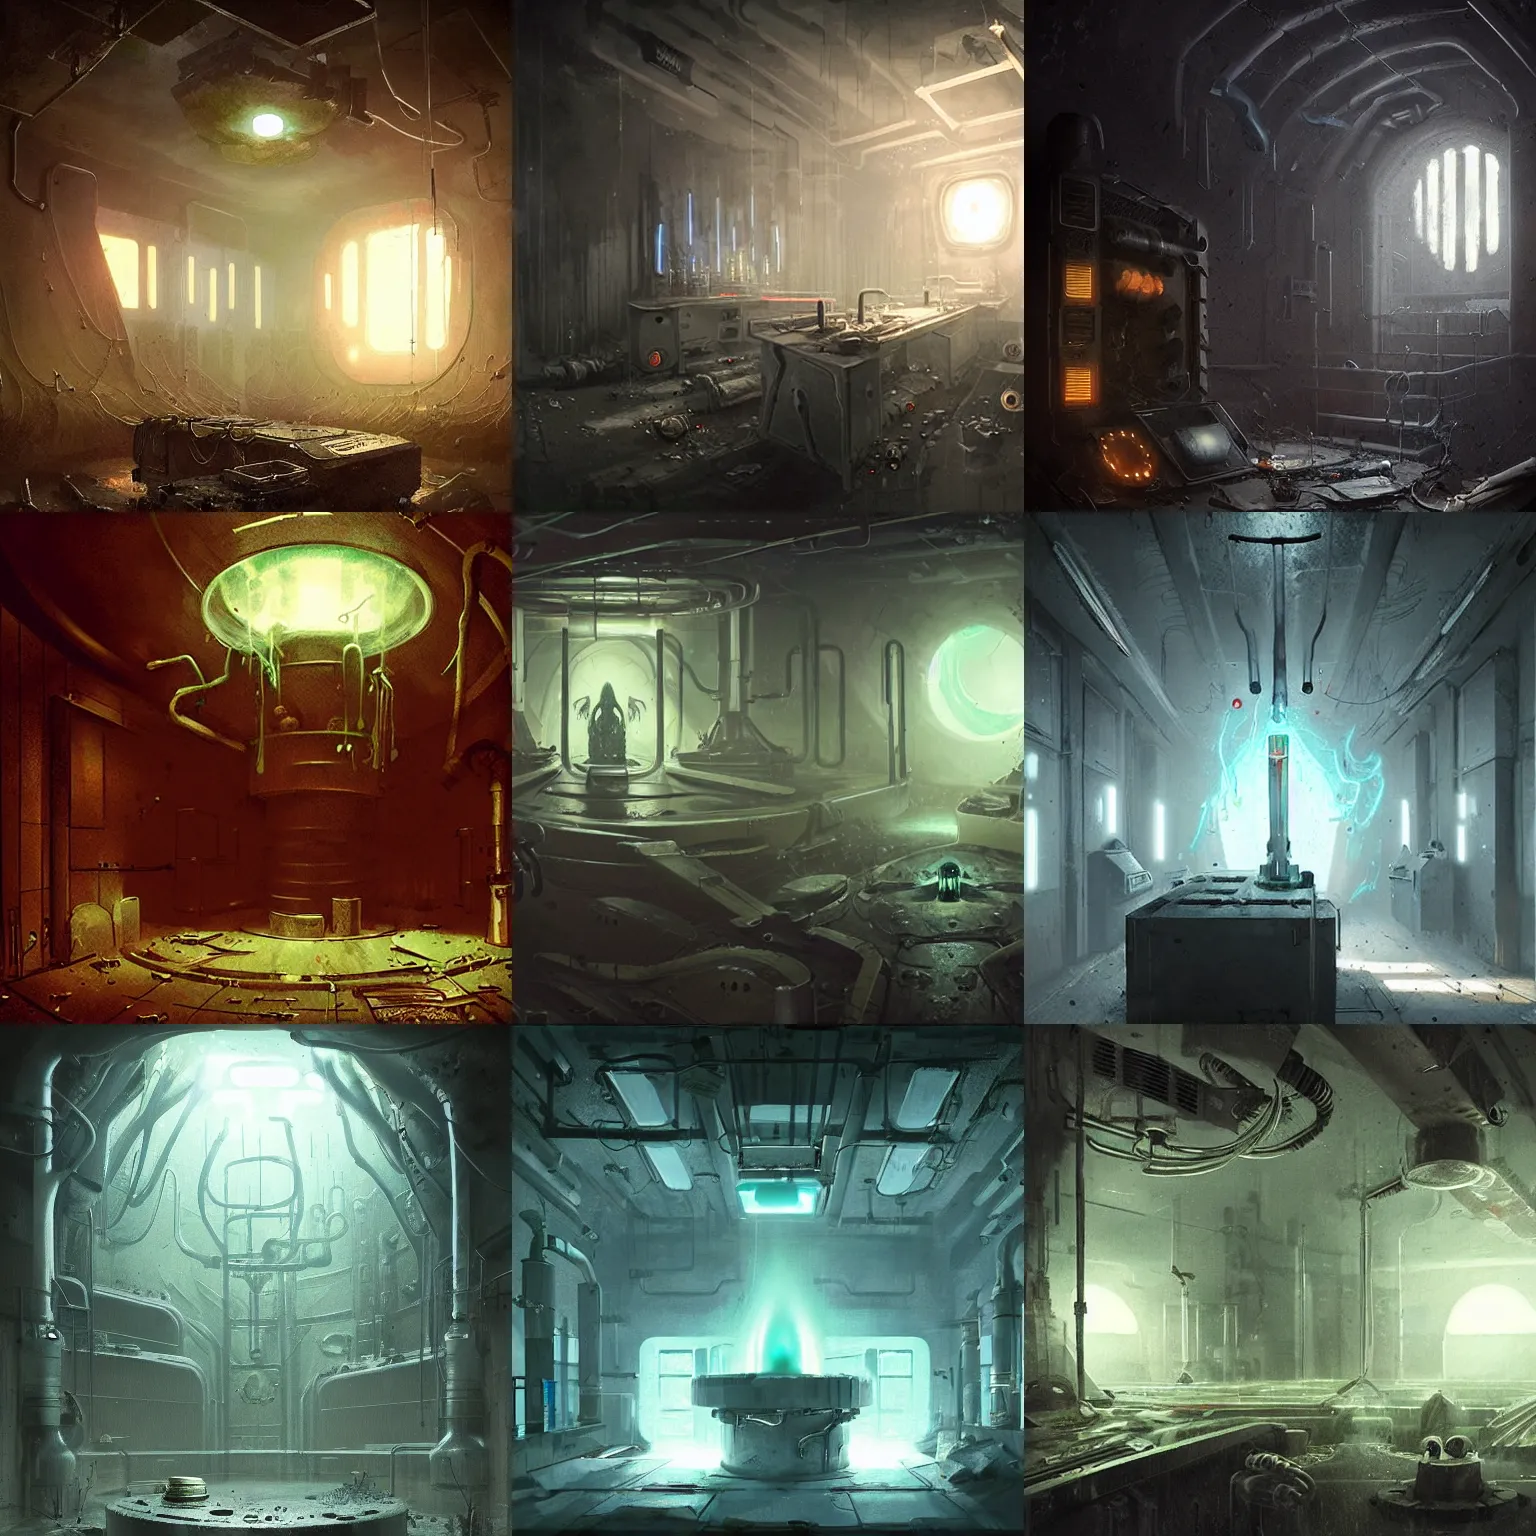 Prompt: dark disturbing bunker laboratory with alien mechanisms inside, with mystical glowing fluid, ultra detailed, made by greg rutkowski